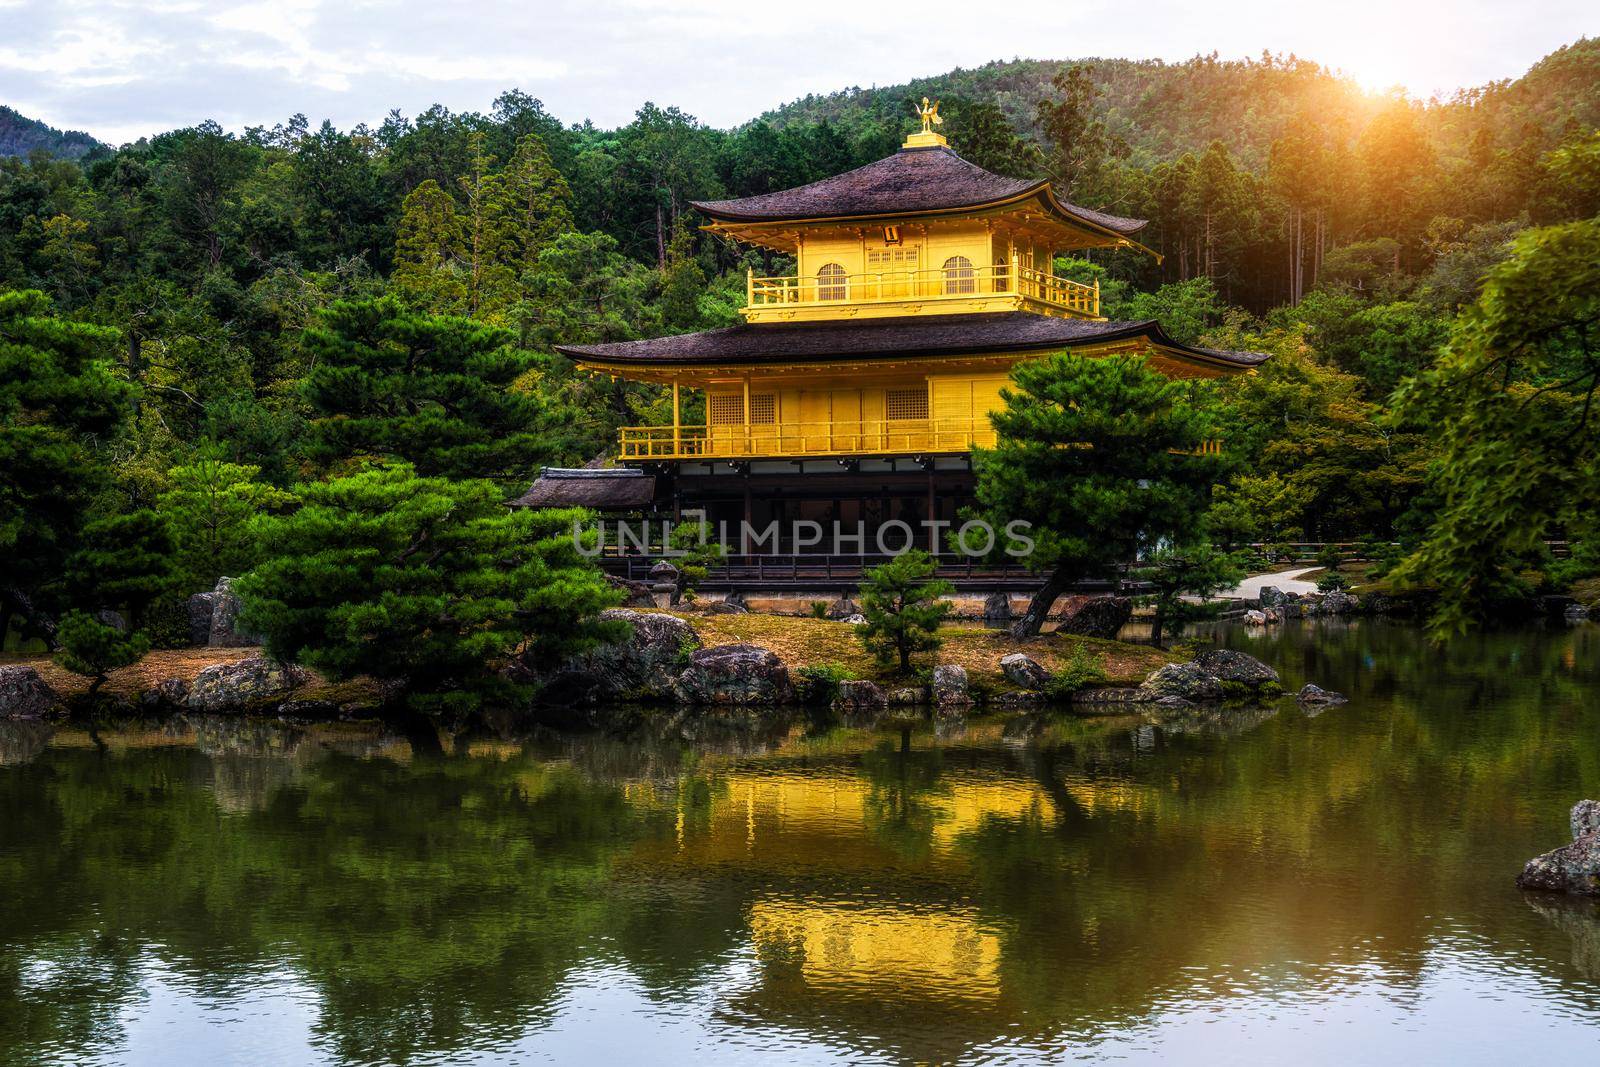 Kinkaku-ji, Golden Pavilion temple in Kyoto Japan by biancoblue